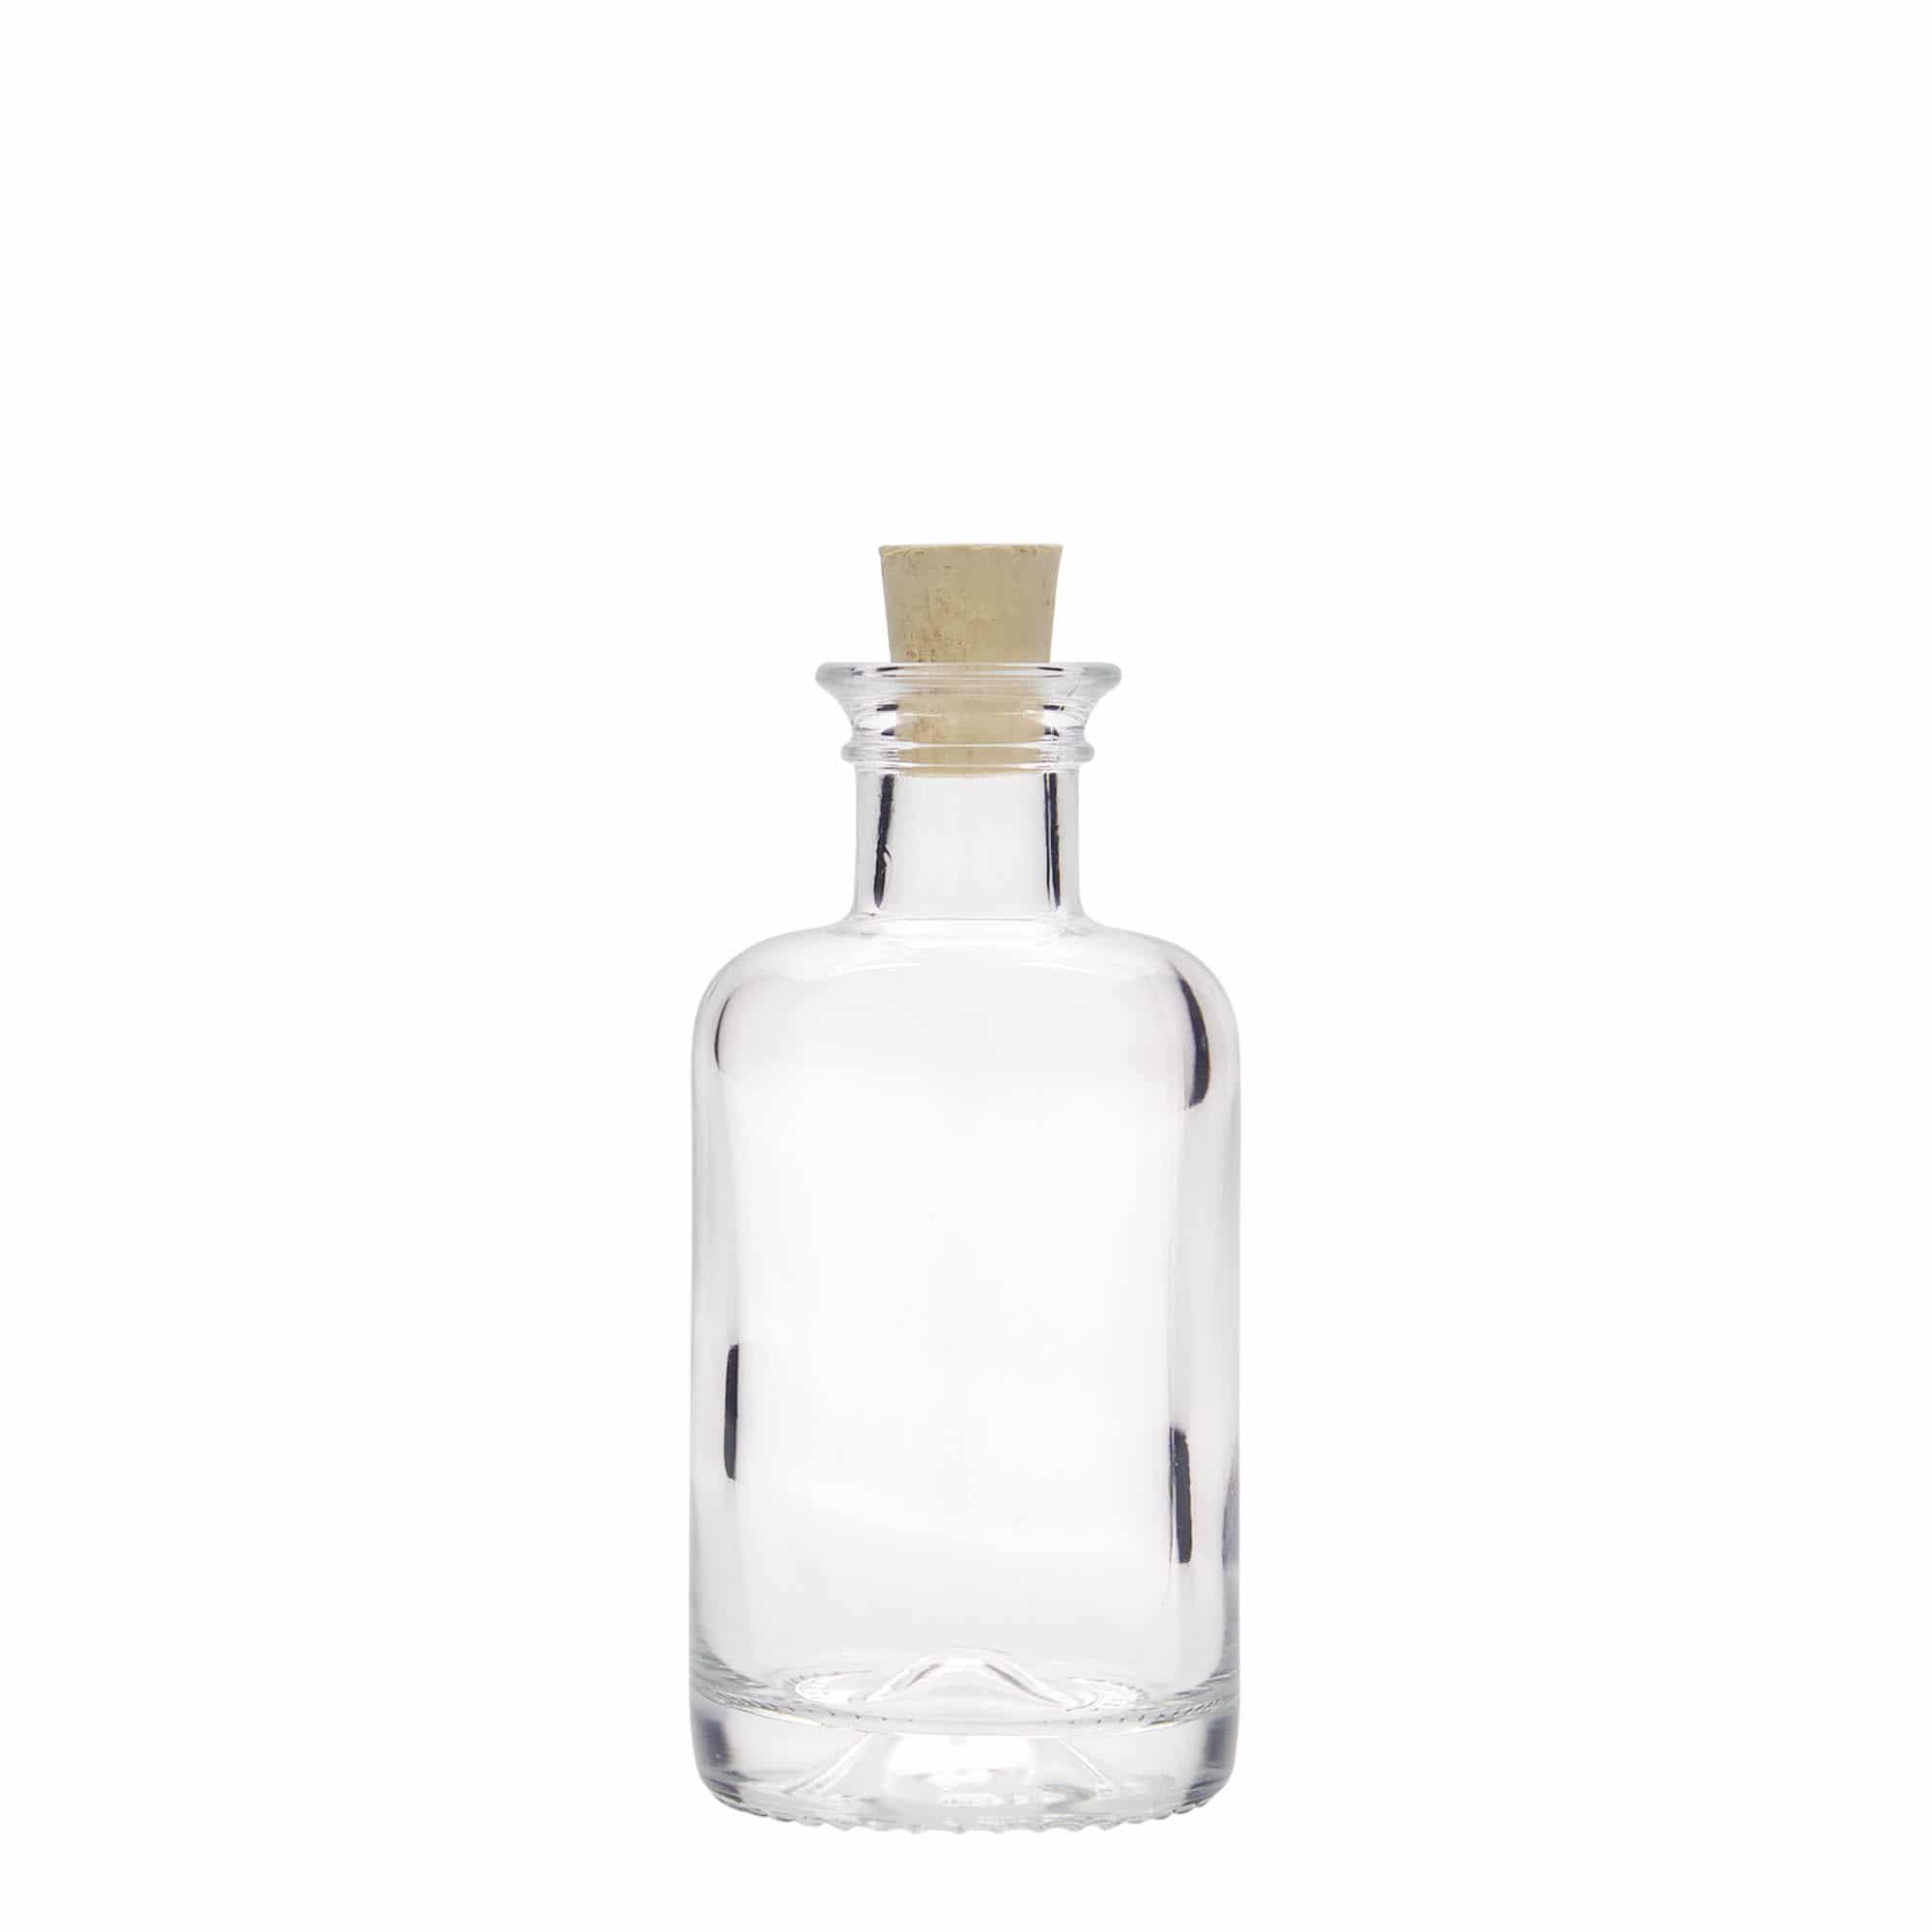 Botella de vidrio de farmacia de 100 ml, boca: corcho